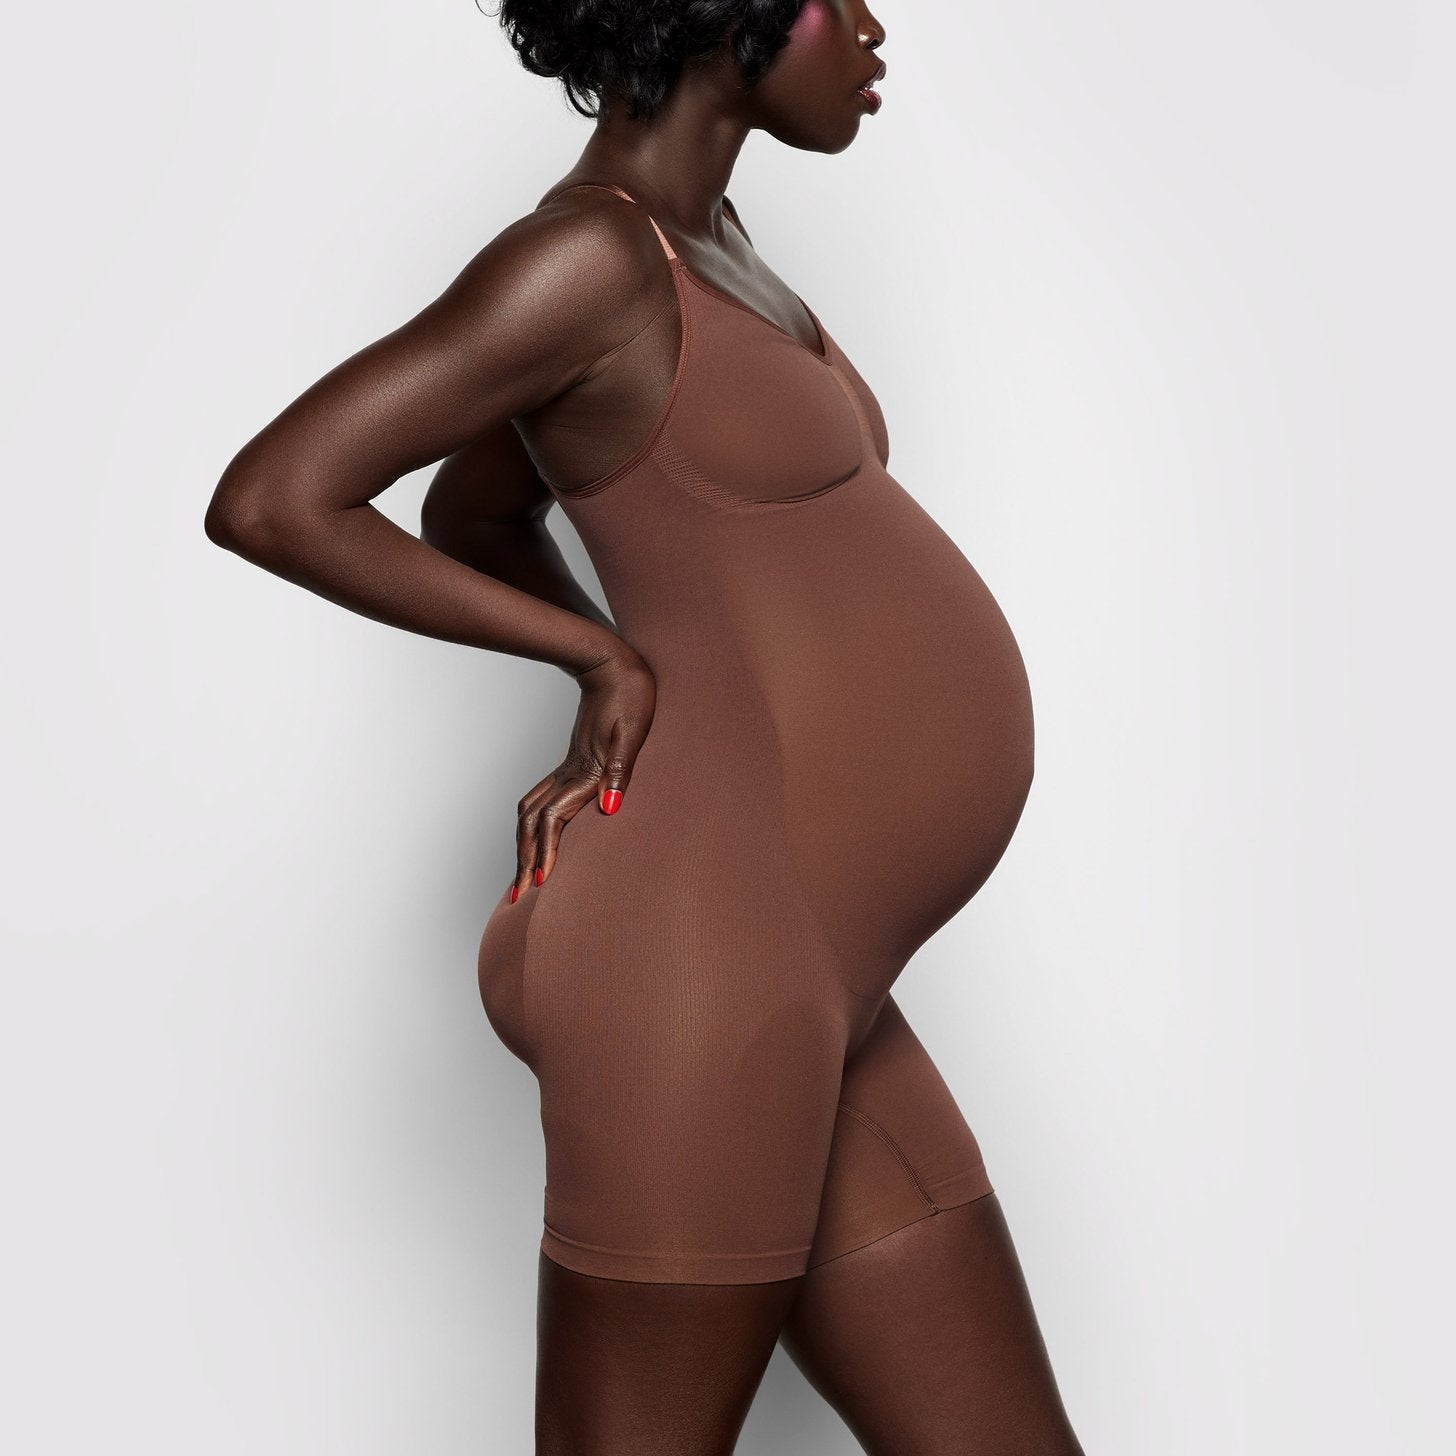 skims maternity wear tryon/review #skims #skimsreview #maternity #skim